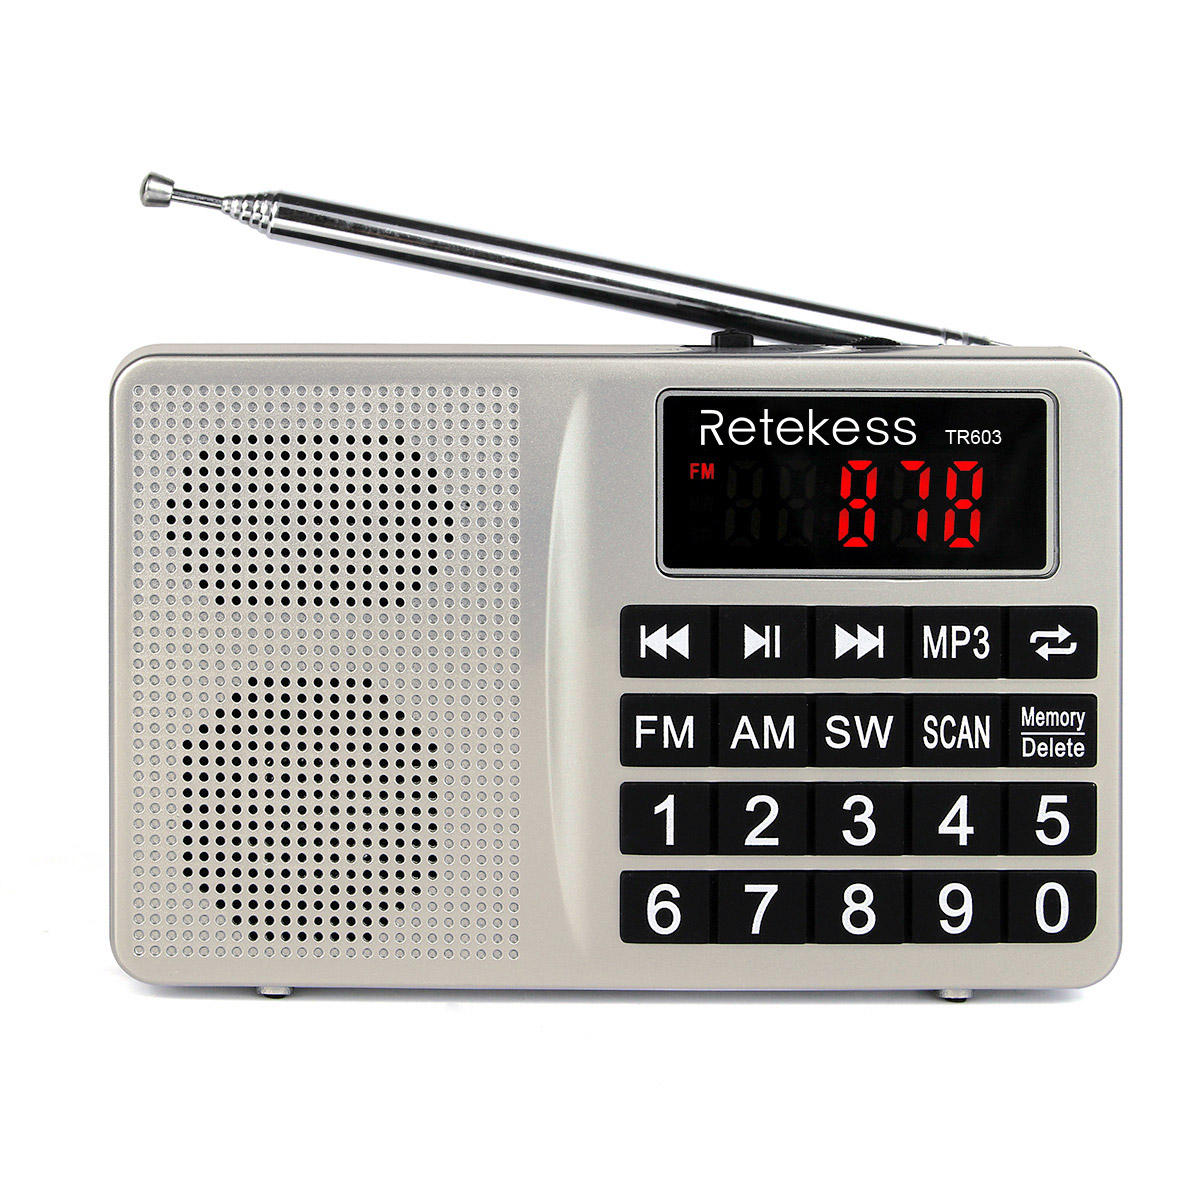 Retekess Digital Pantalla FM AM SW Radio Reproductor de audio AUX MP3 para el teléfono móvil Regalo para familia